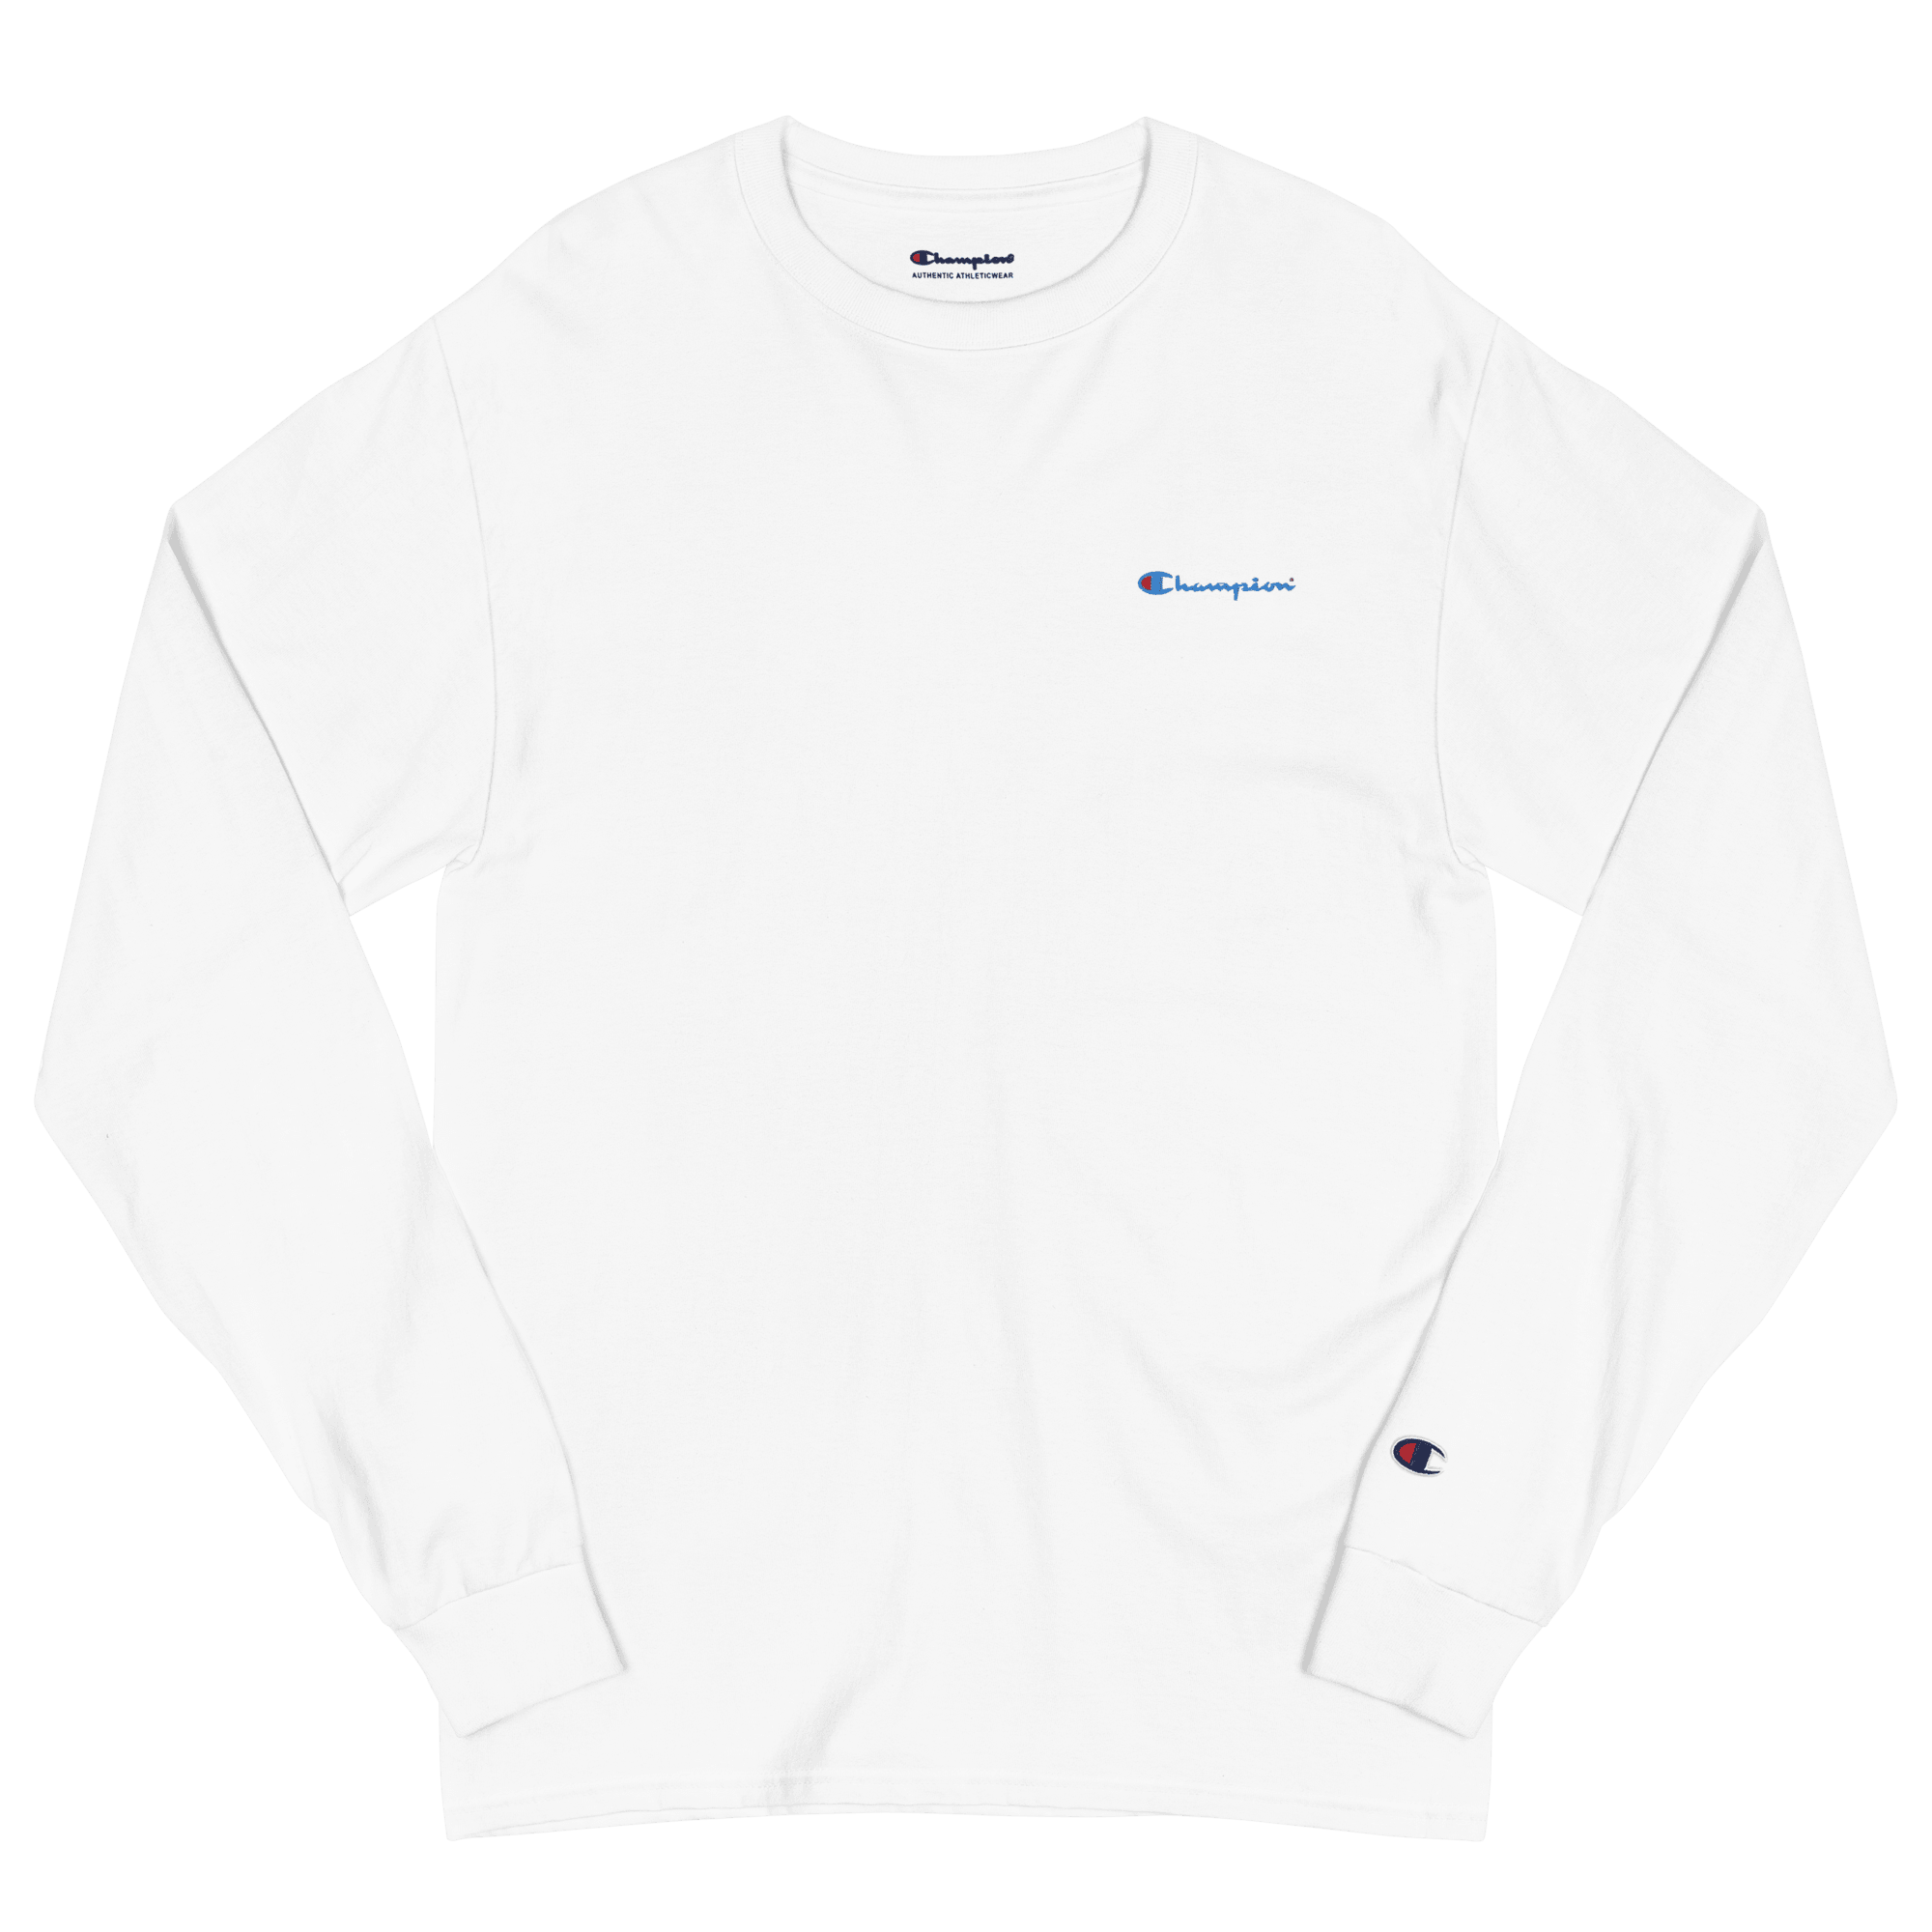 Men's Champion Long Sleeve Shirt - The Trendy